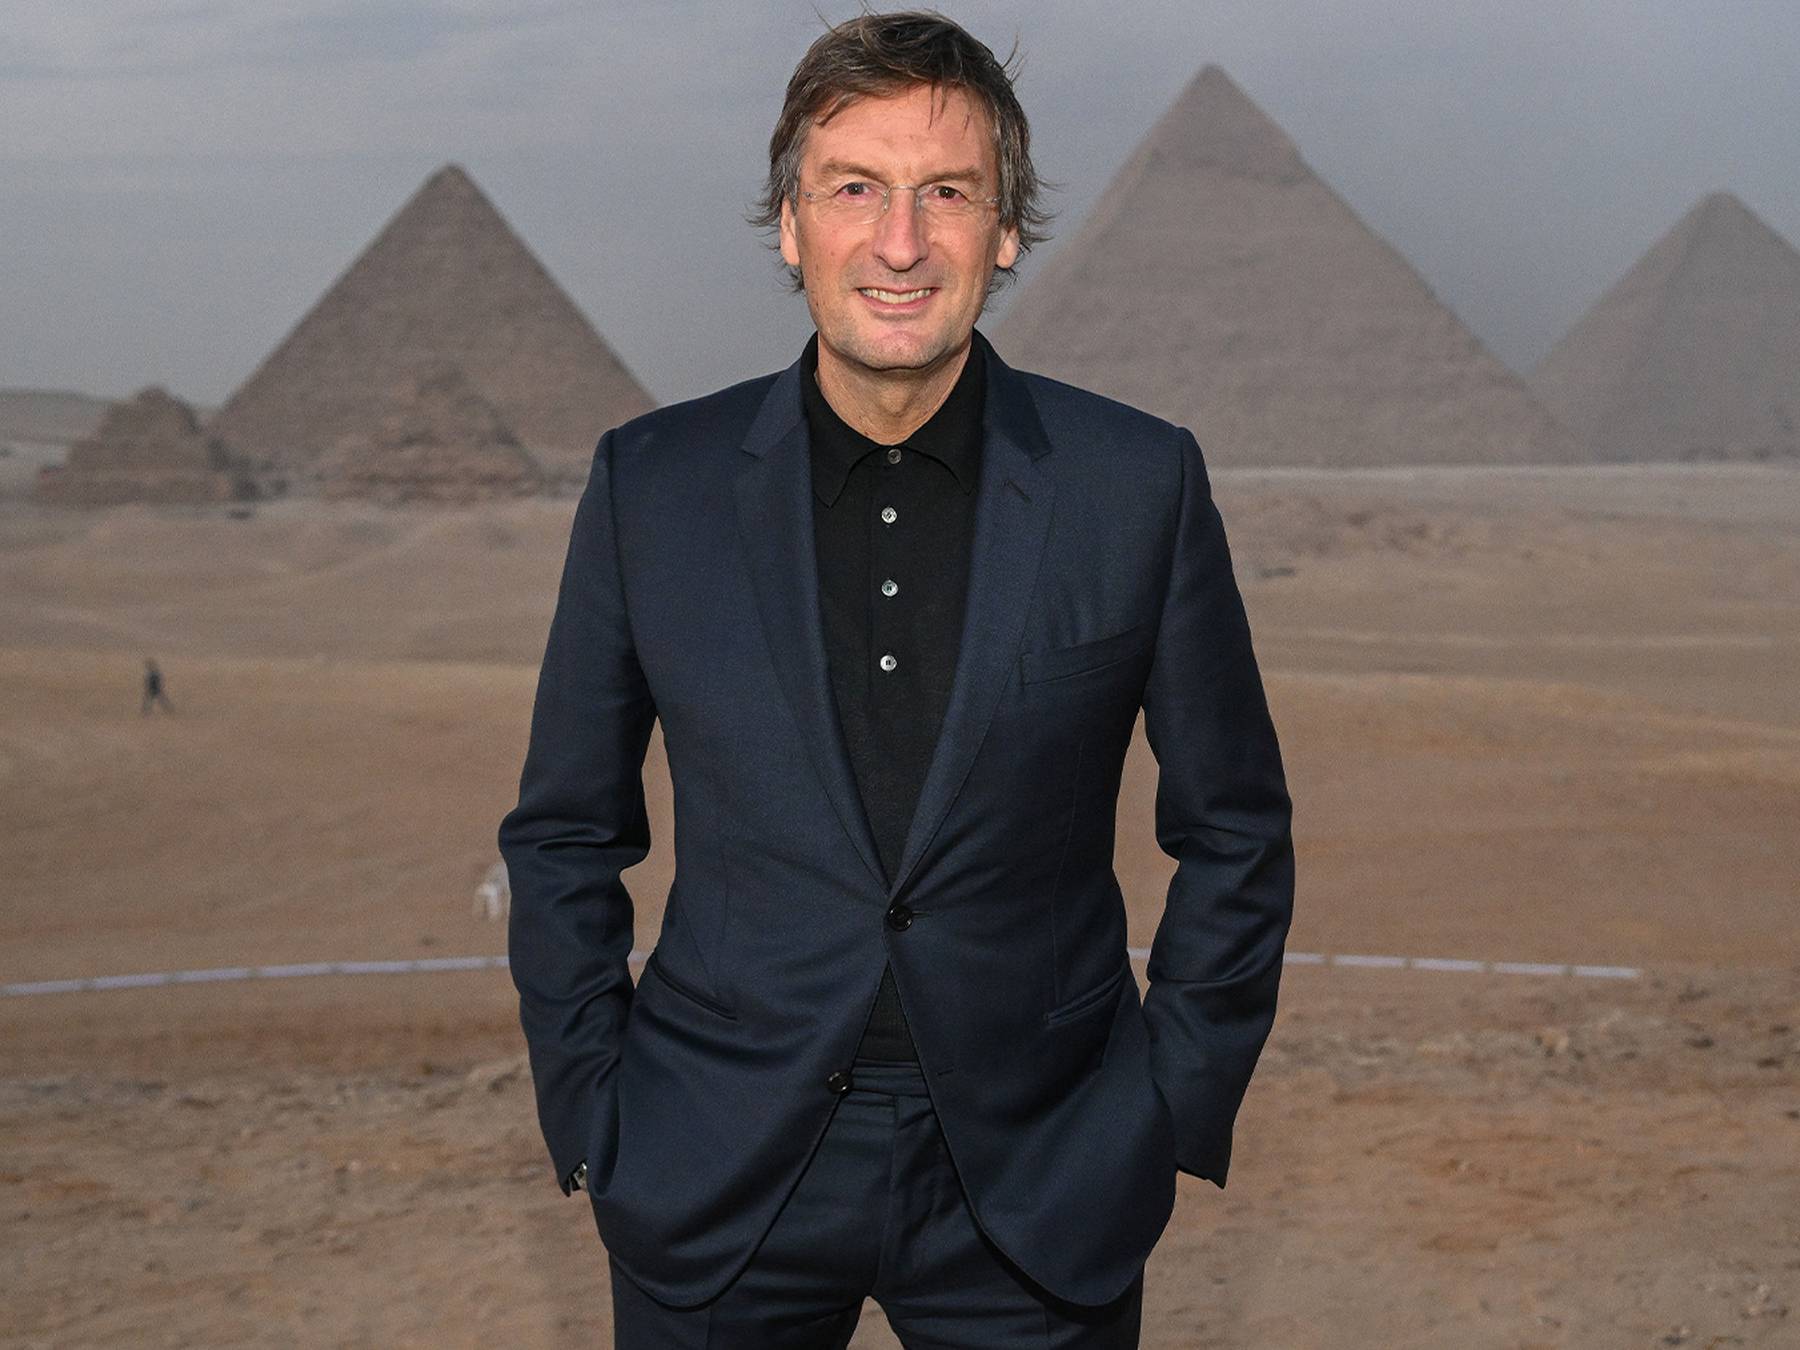 Pietro Beccari named Louis Vuitton CEO in major LVMH management